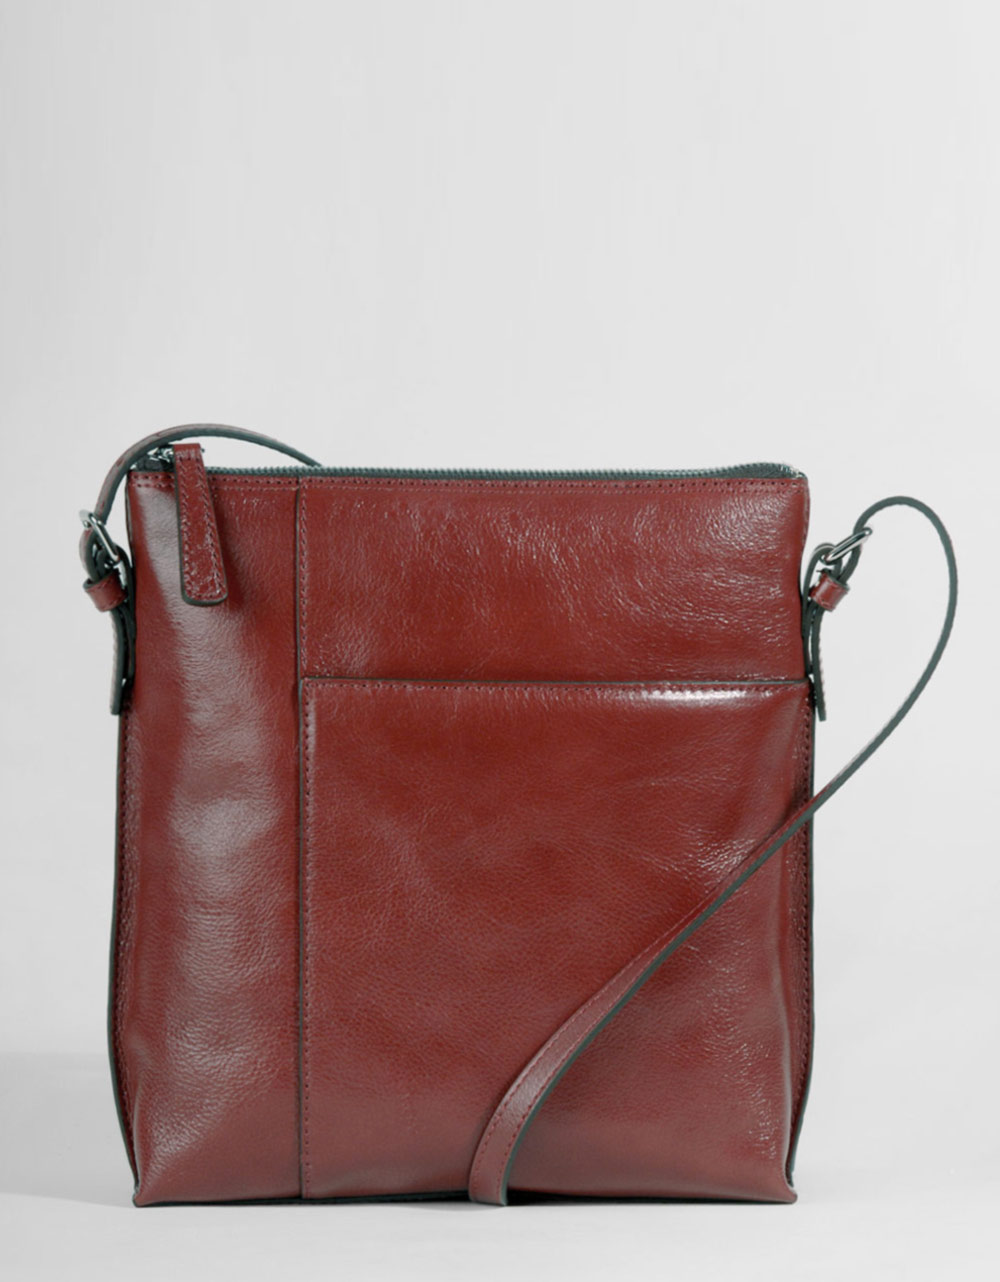 Hobo International Alessa Leather Cross-body Bag in Red (dark red) | Lyst